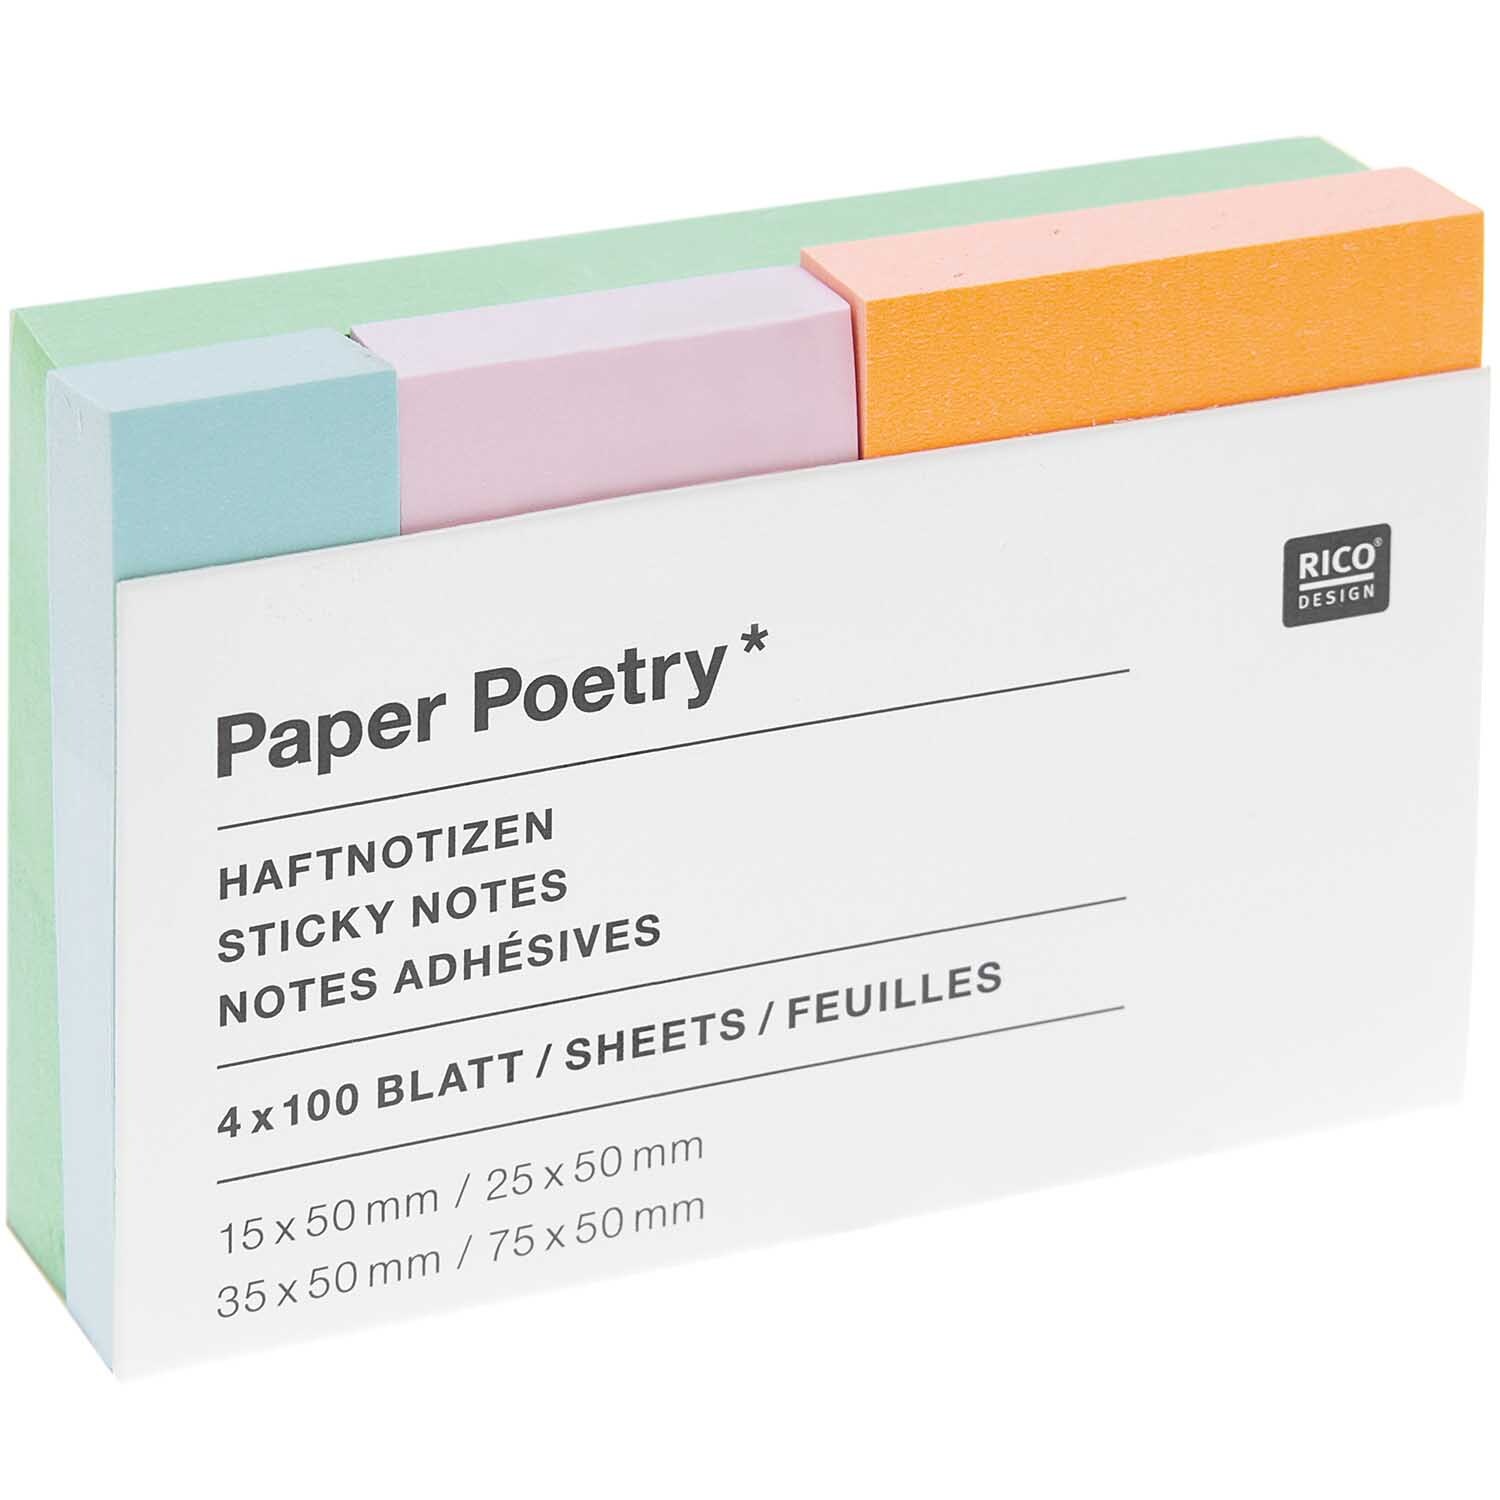 Paper Poetry Haftnotizen pastell 4x100 Blatt